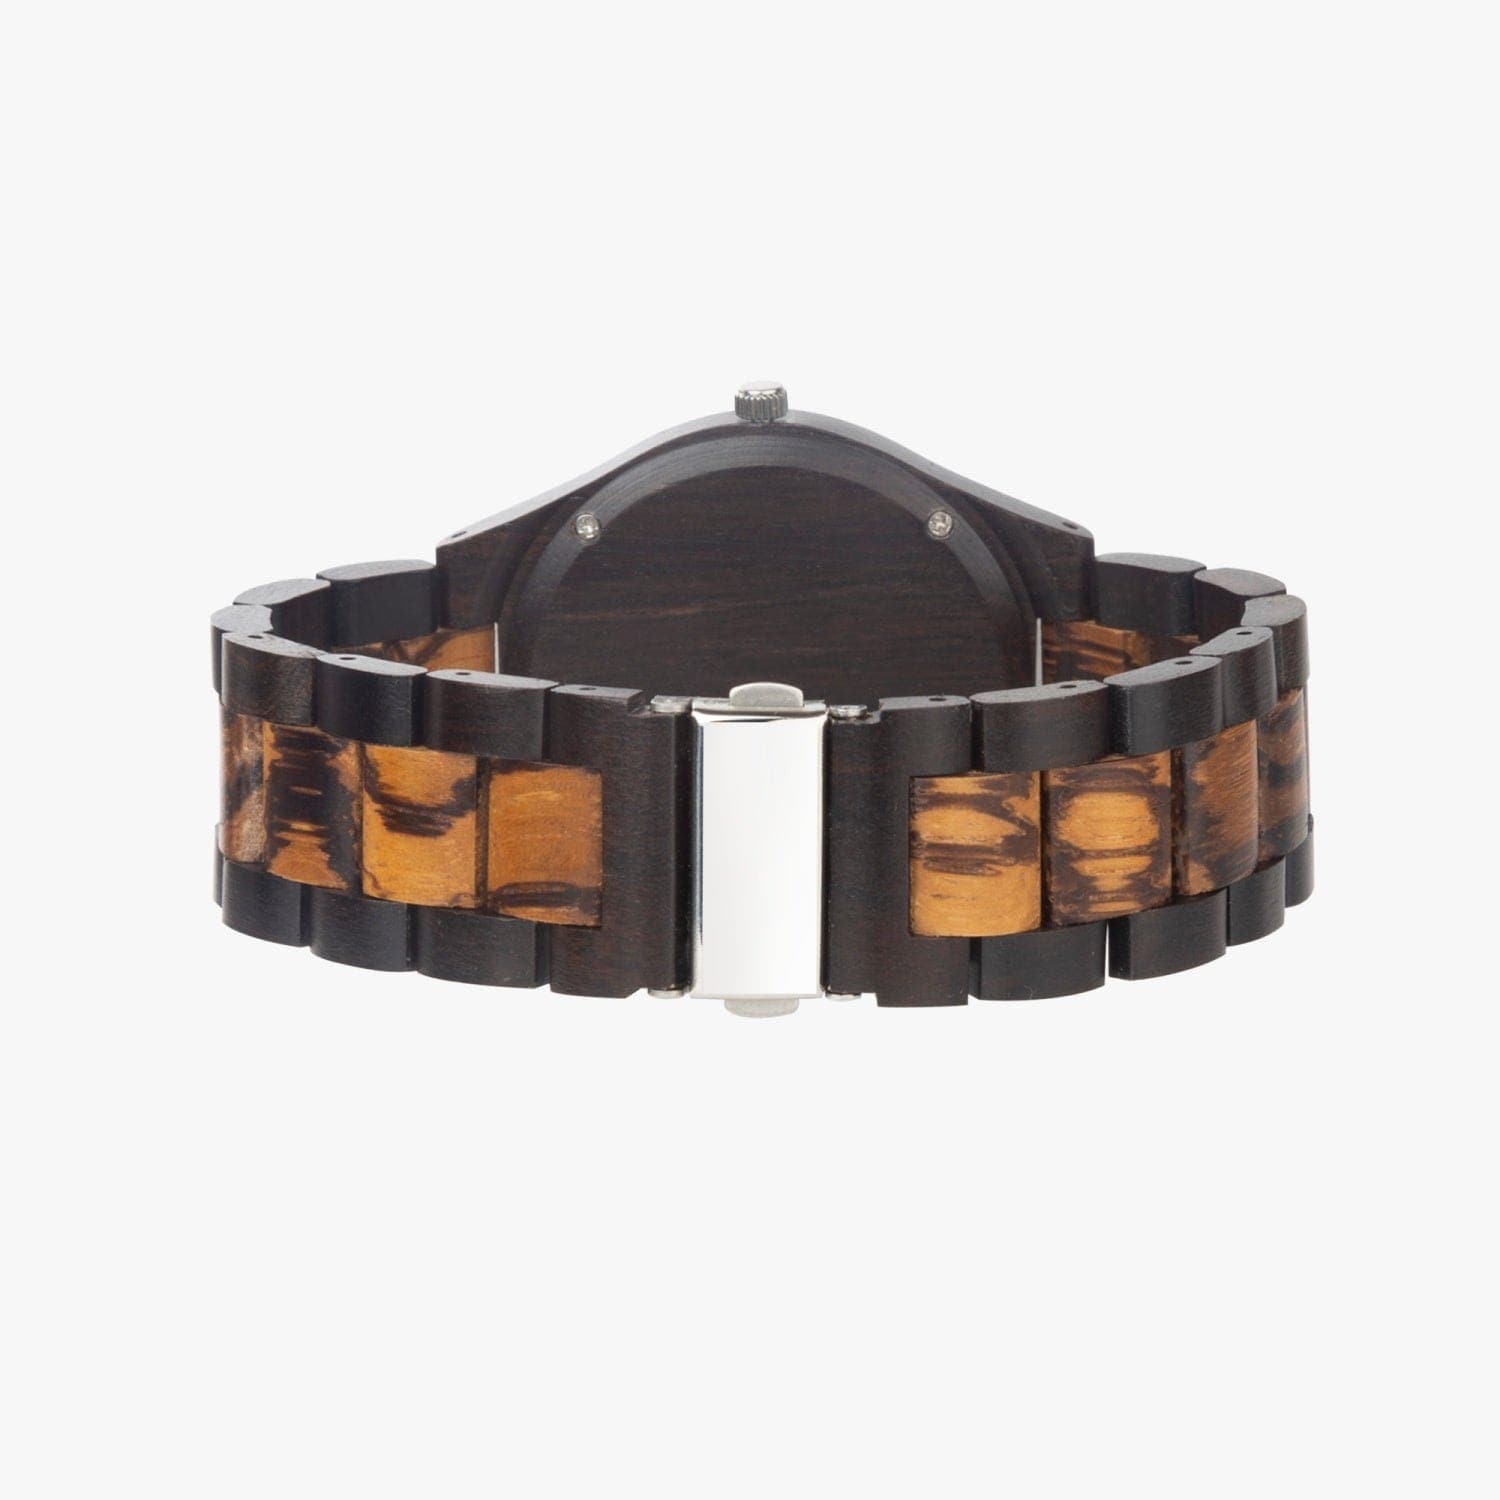 Red oak.  Ebony Wooden Watch,  Designer watch by Sensus Studio Design